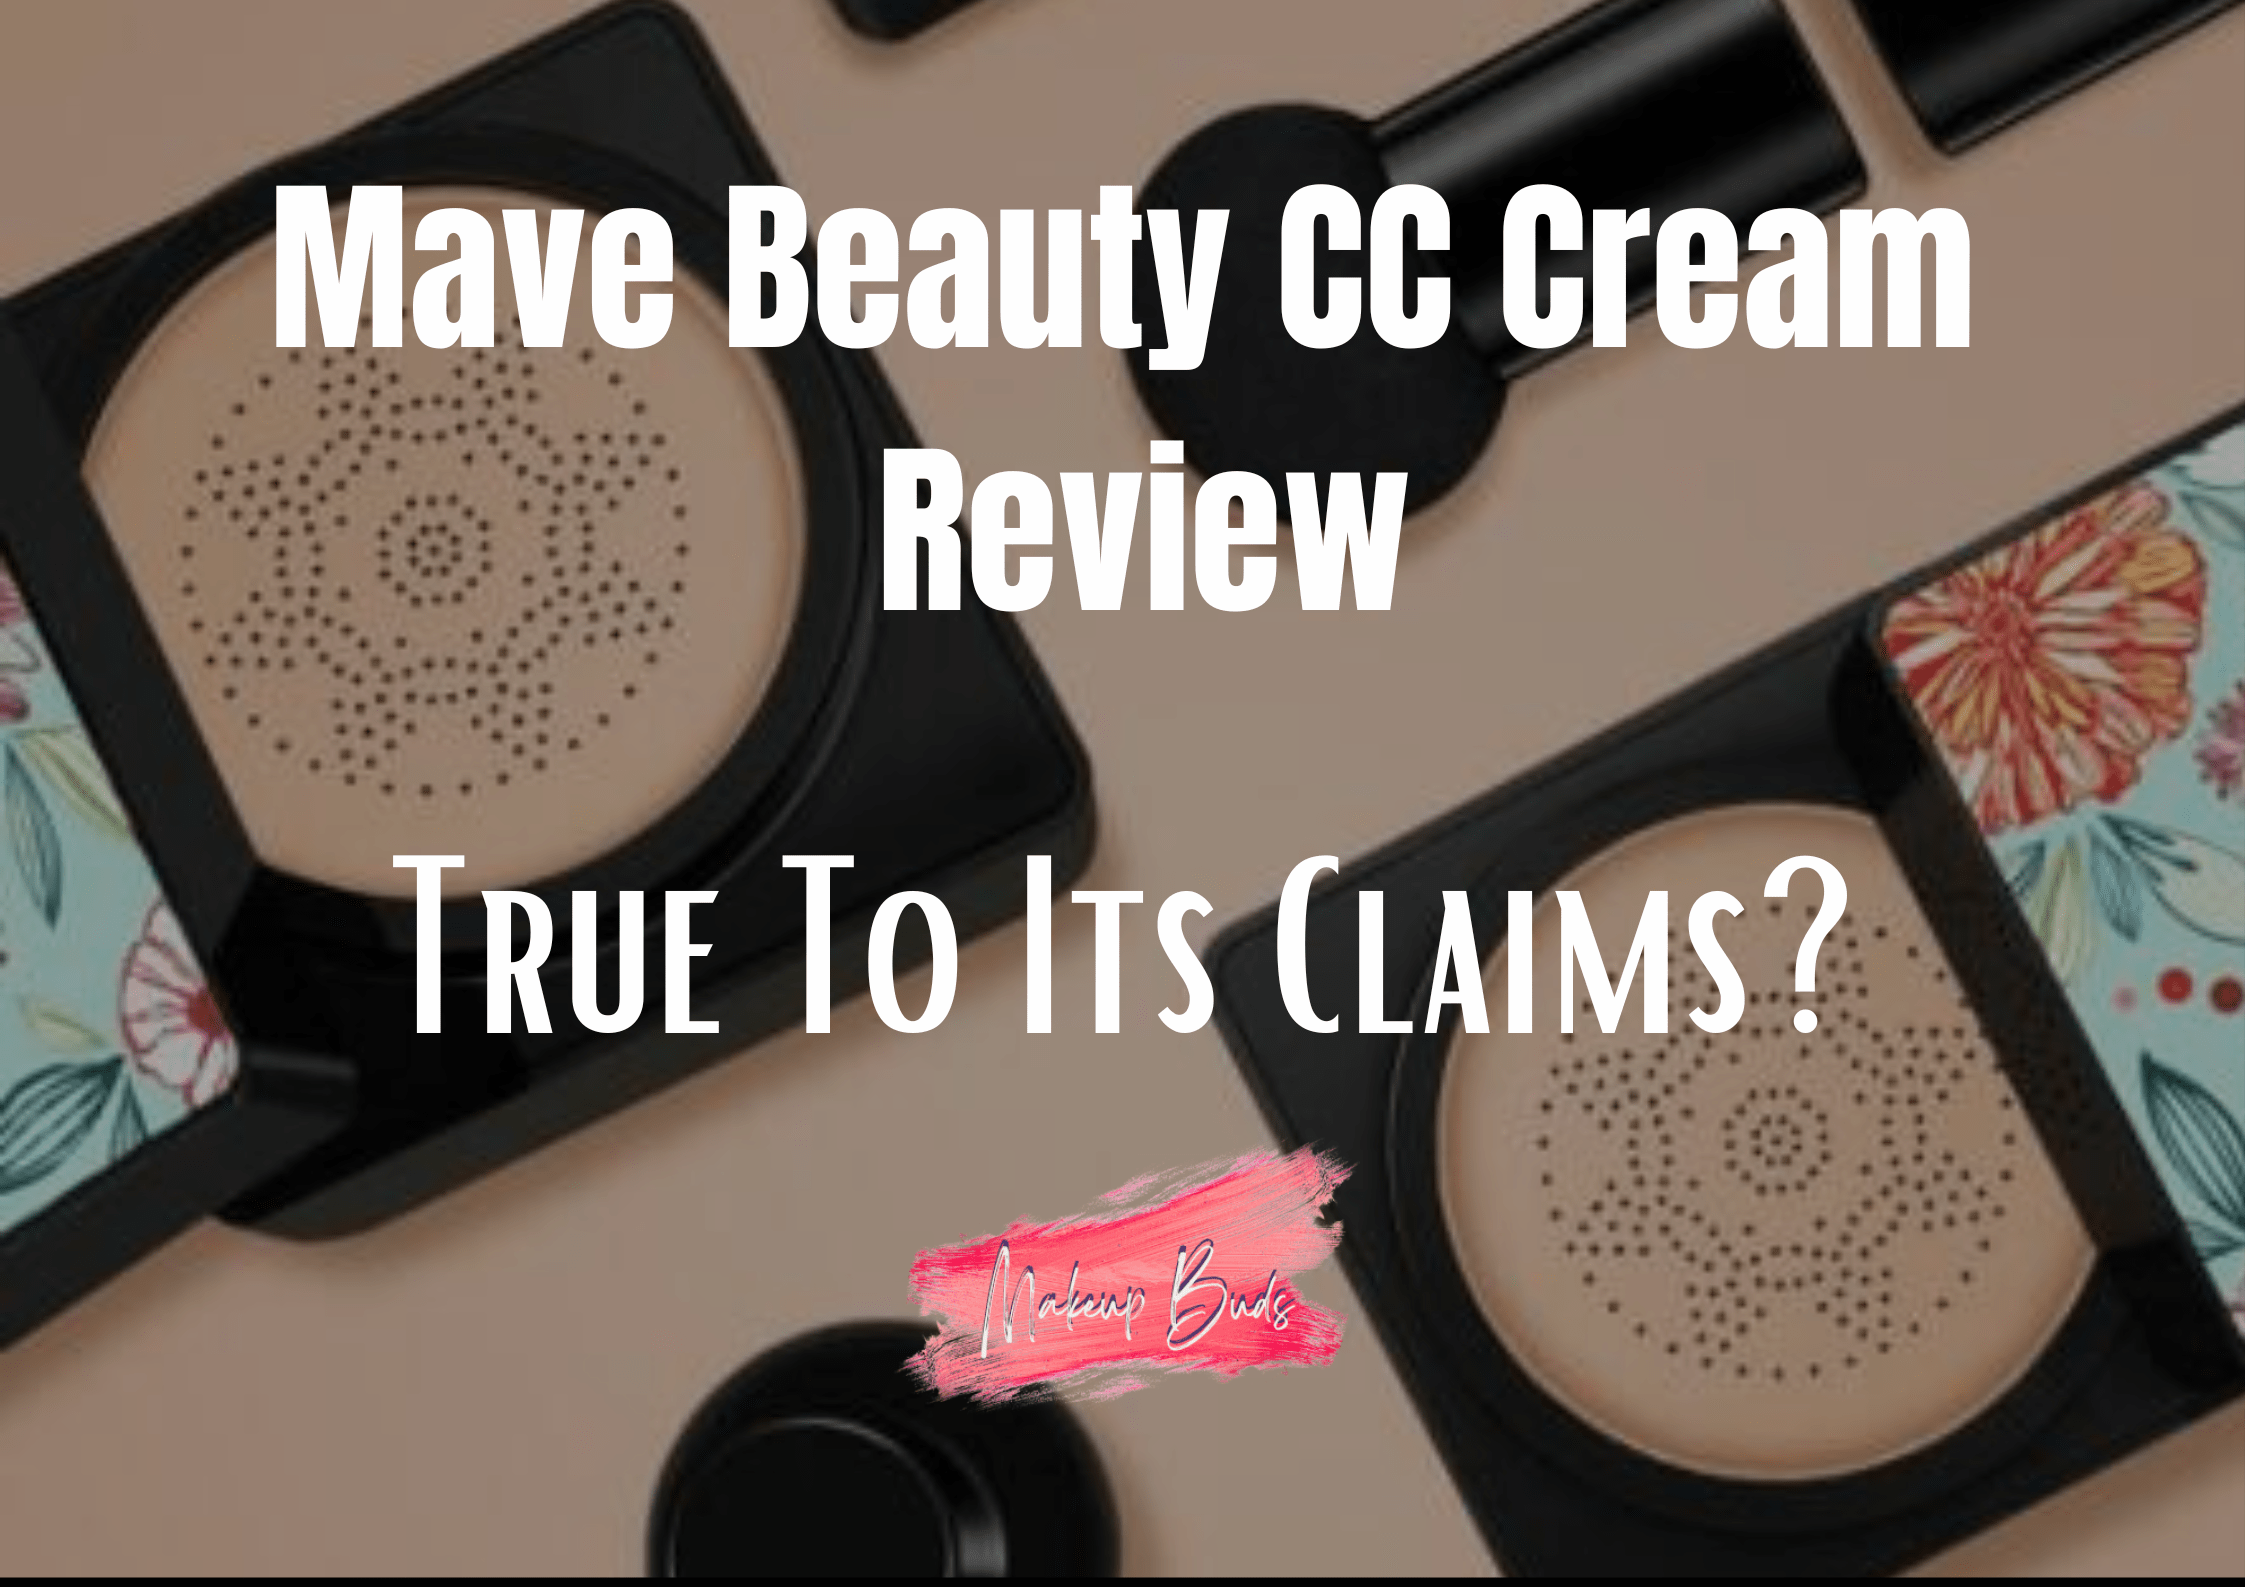 Mave Beauty CC Cream Reviews